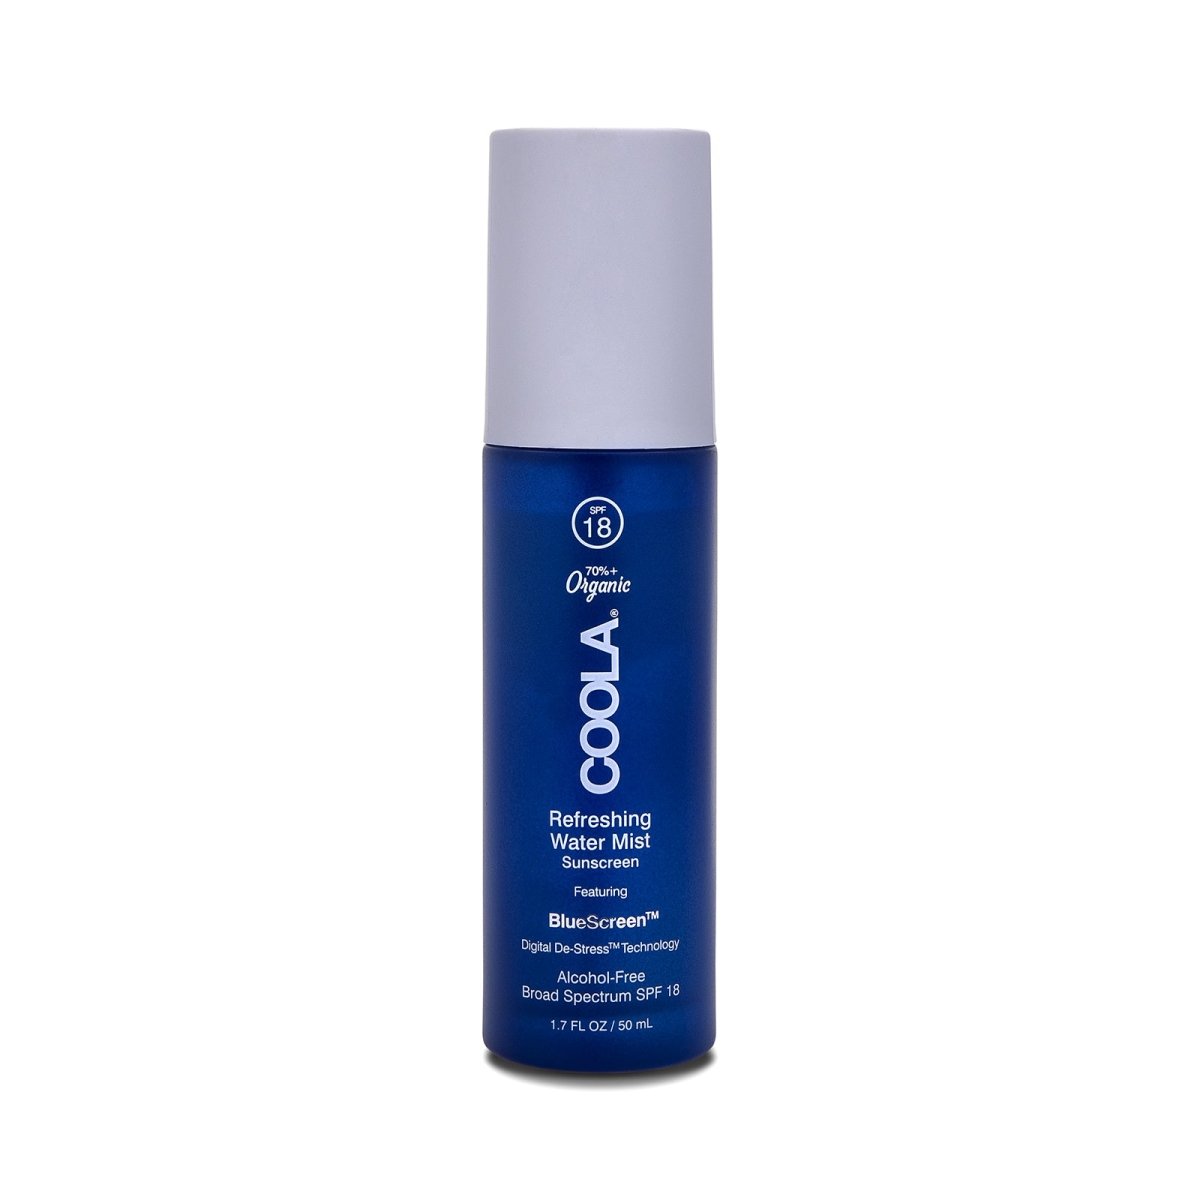 COOLA - Organic Full Spectrum 360 Refreshing Water Mist Sunscreen SPF 18 - SkincareEssentials